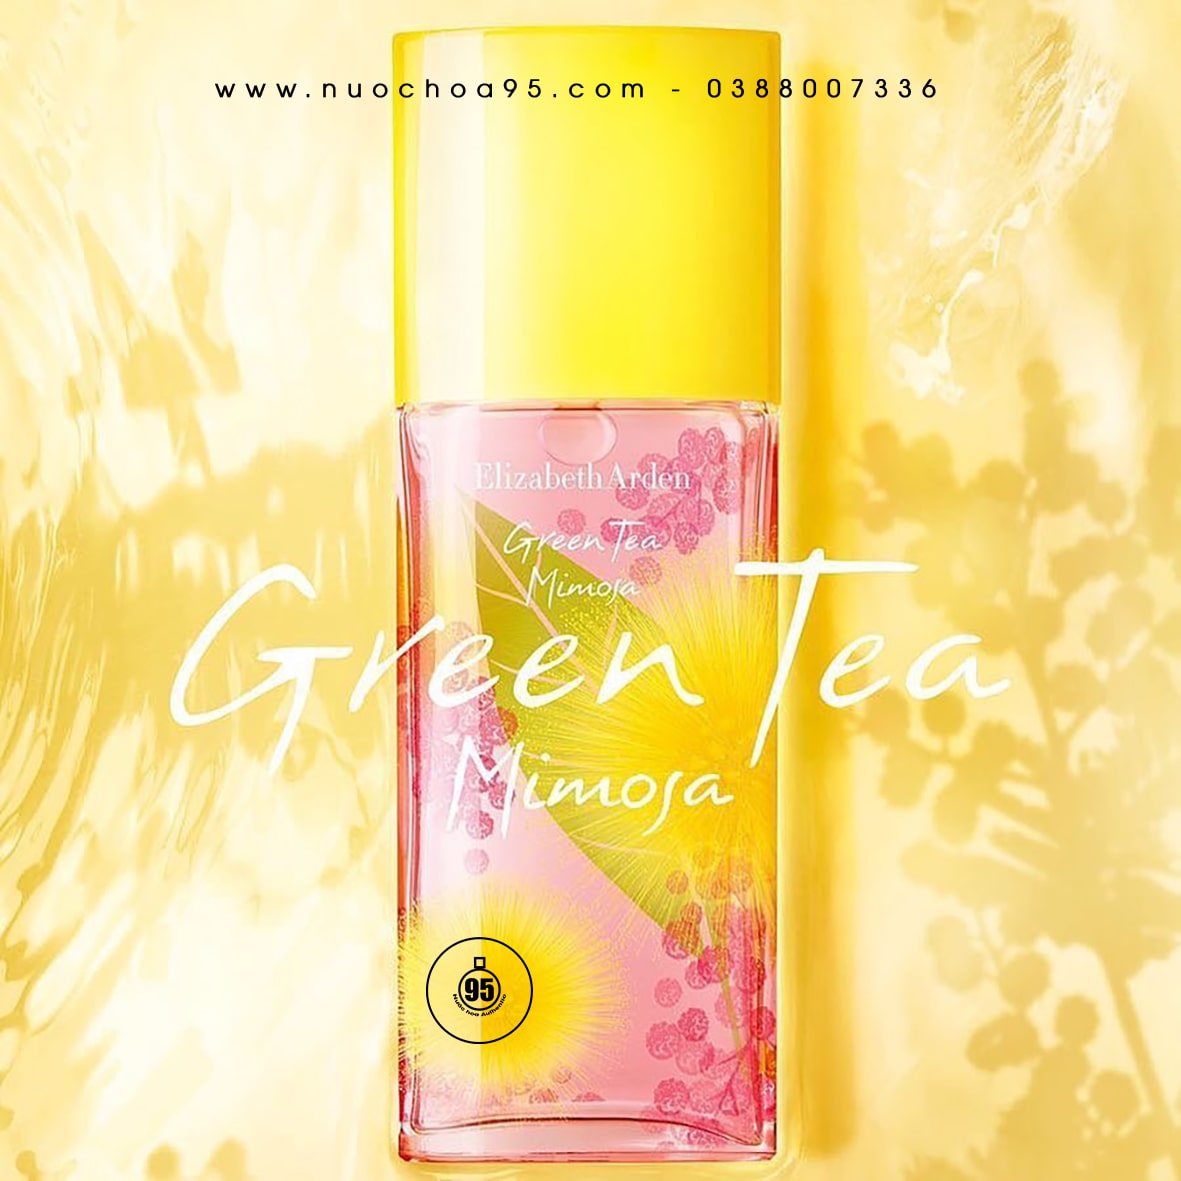 Nước hoa Elizabeth Arden Green Tea Mimosa - Ảnh 1